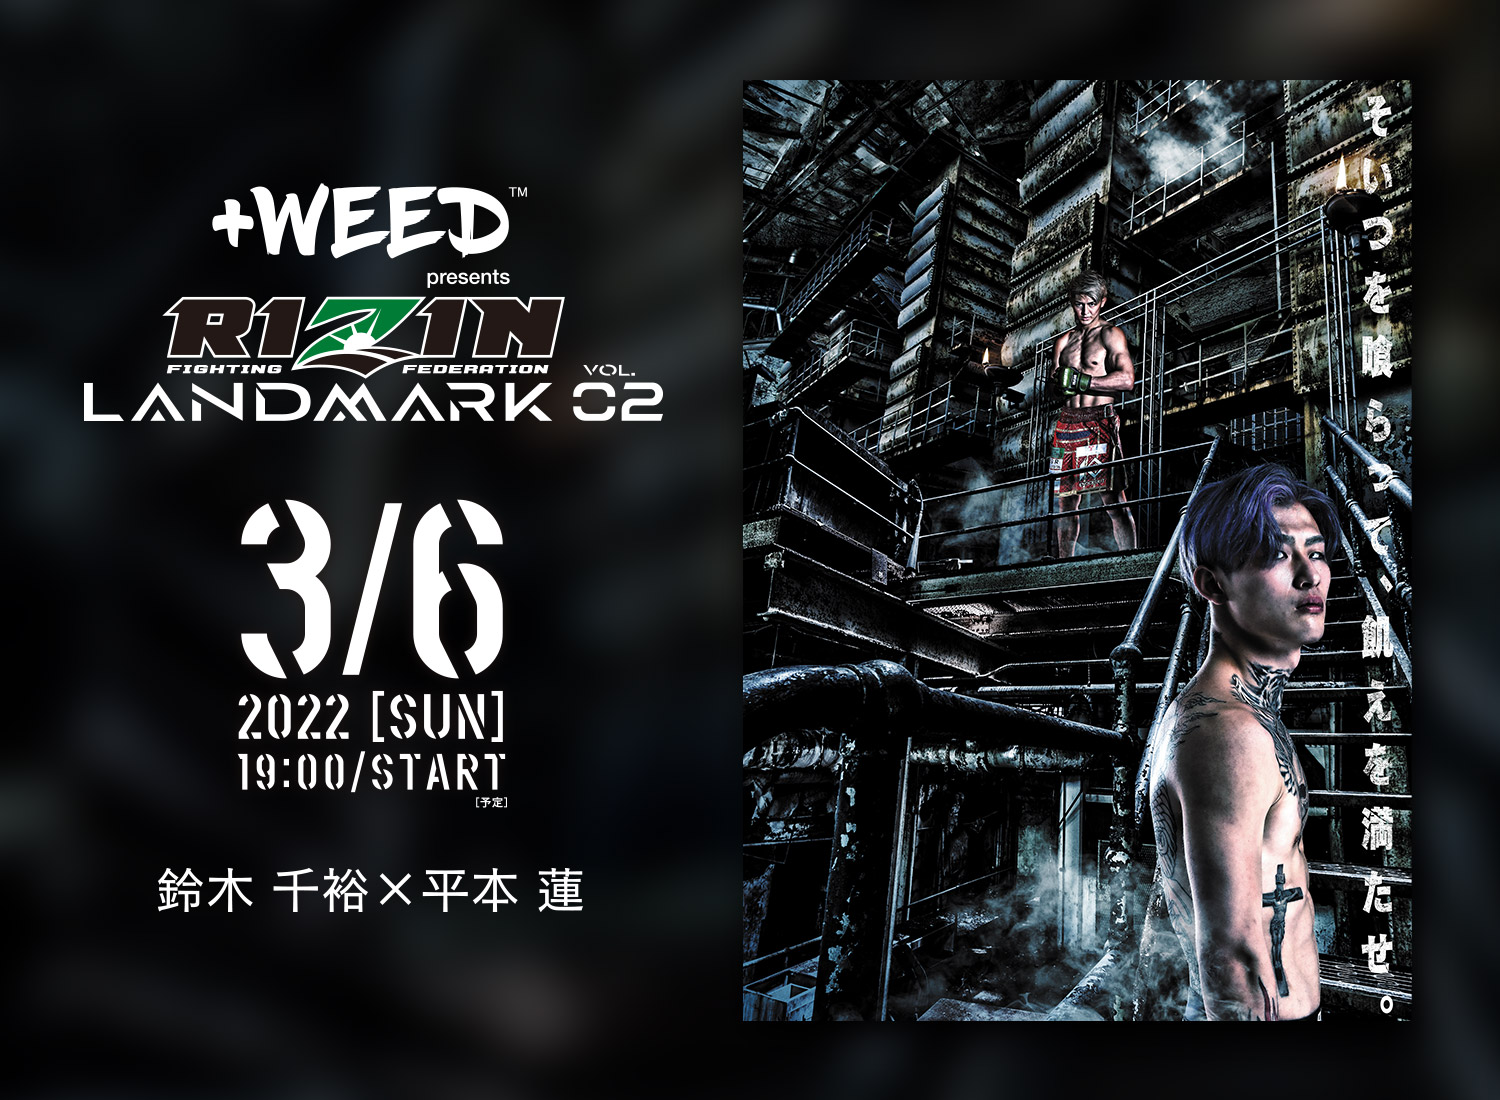 +WEED presents RIZIN LANDMARK vol.2 鈴木千裕 vs. 平本蓮